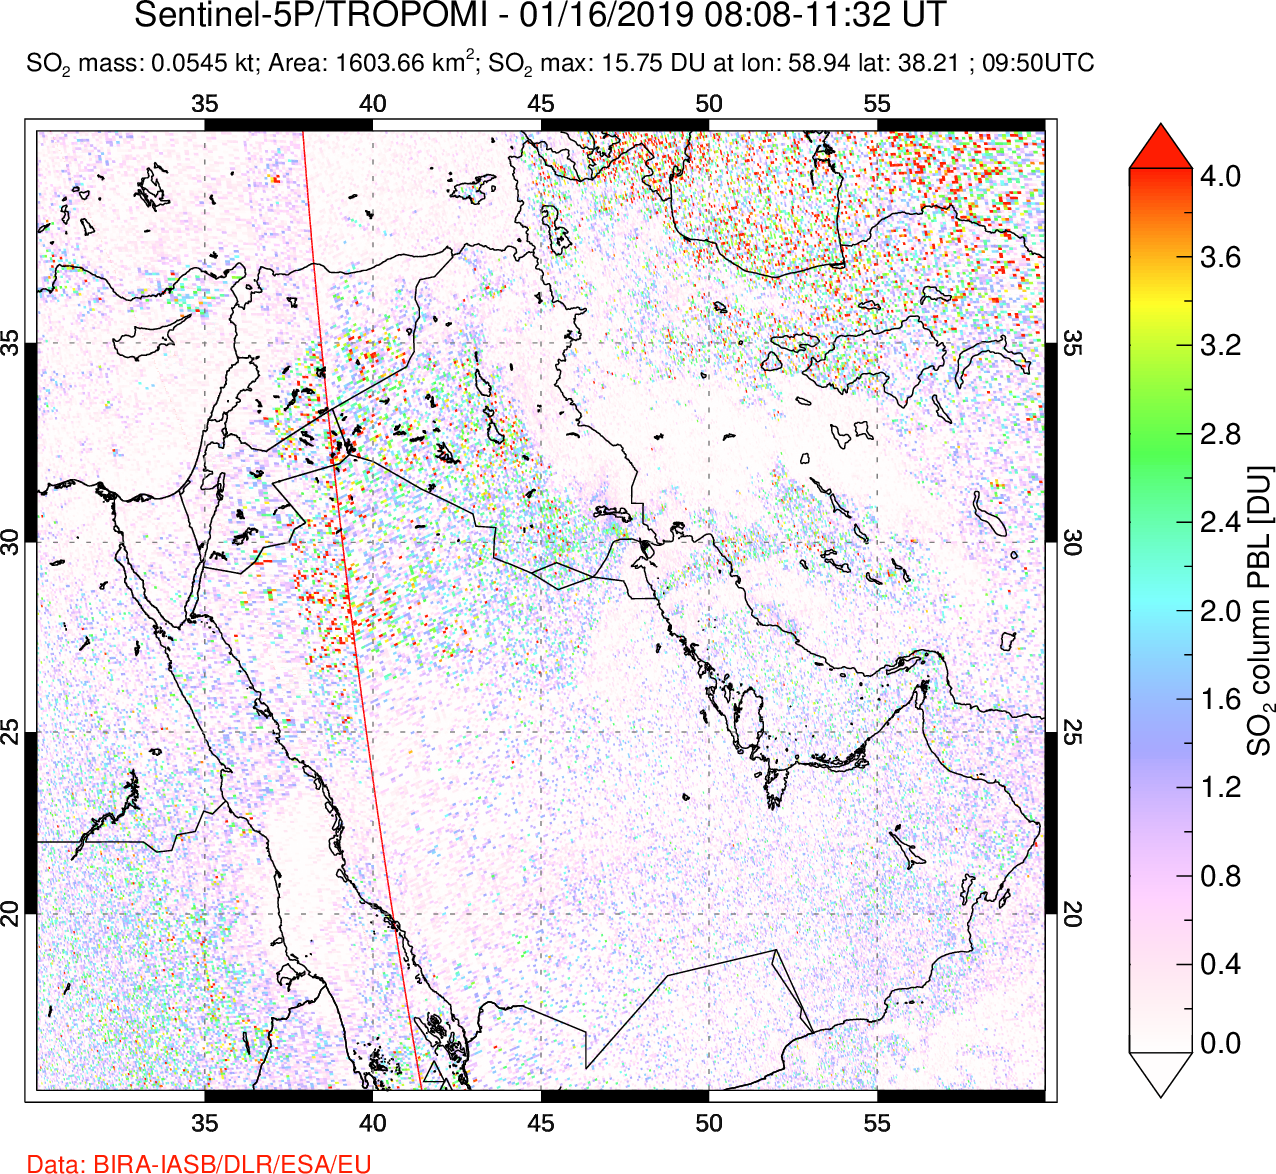 A sulfur dioxide image over Middle East on Jan 16, 2019.